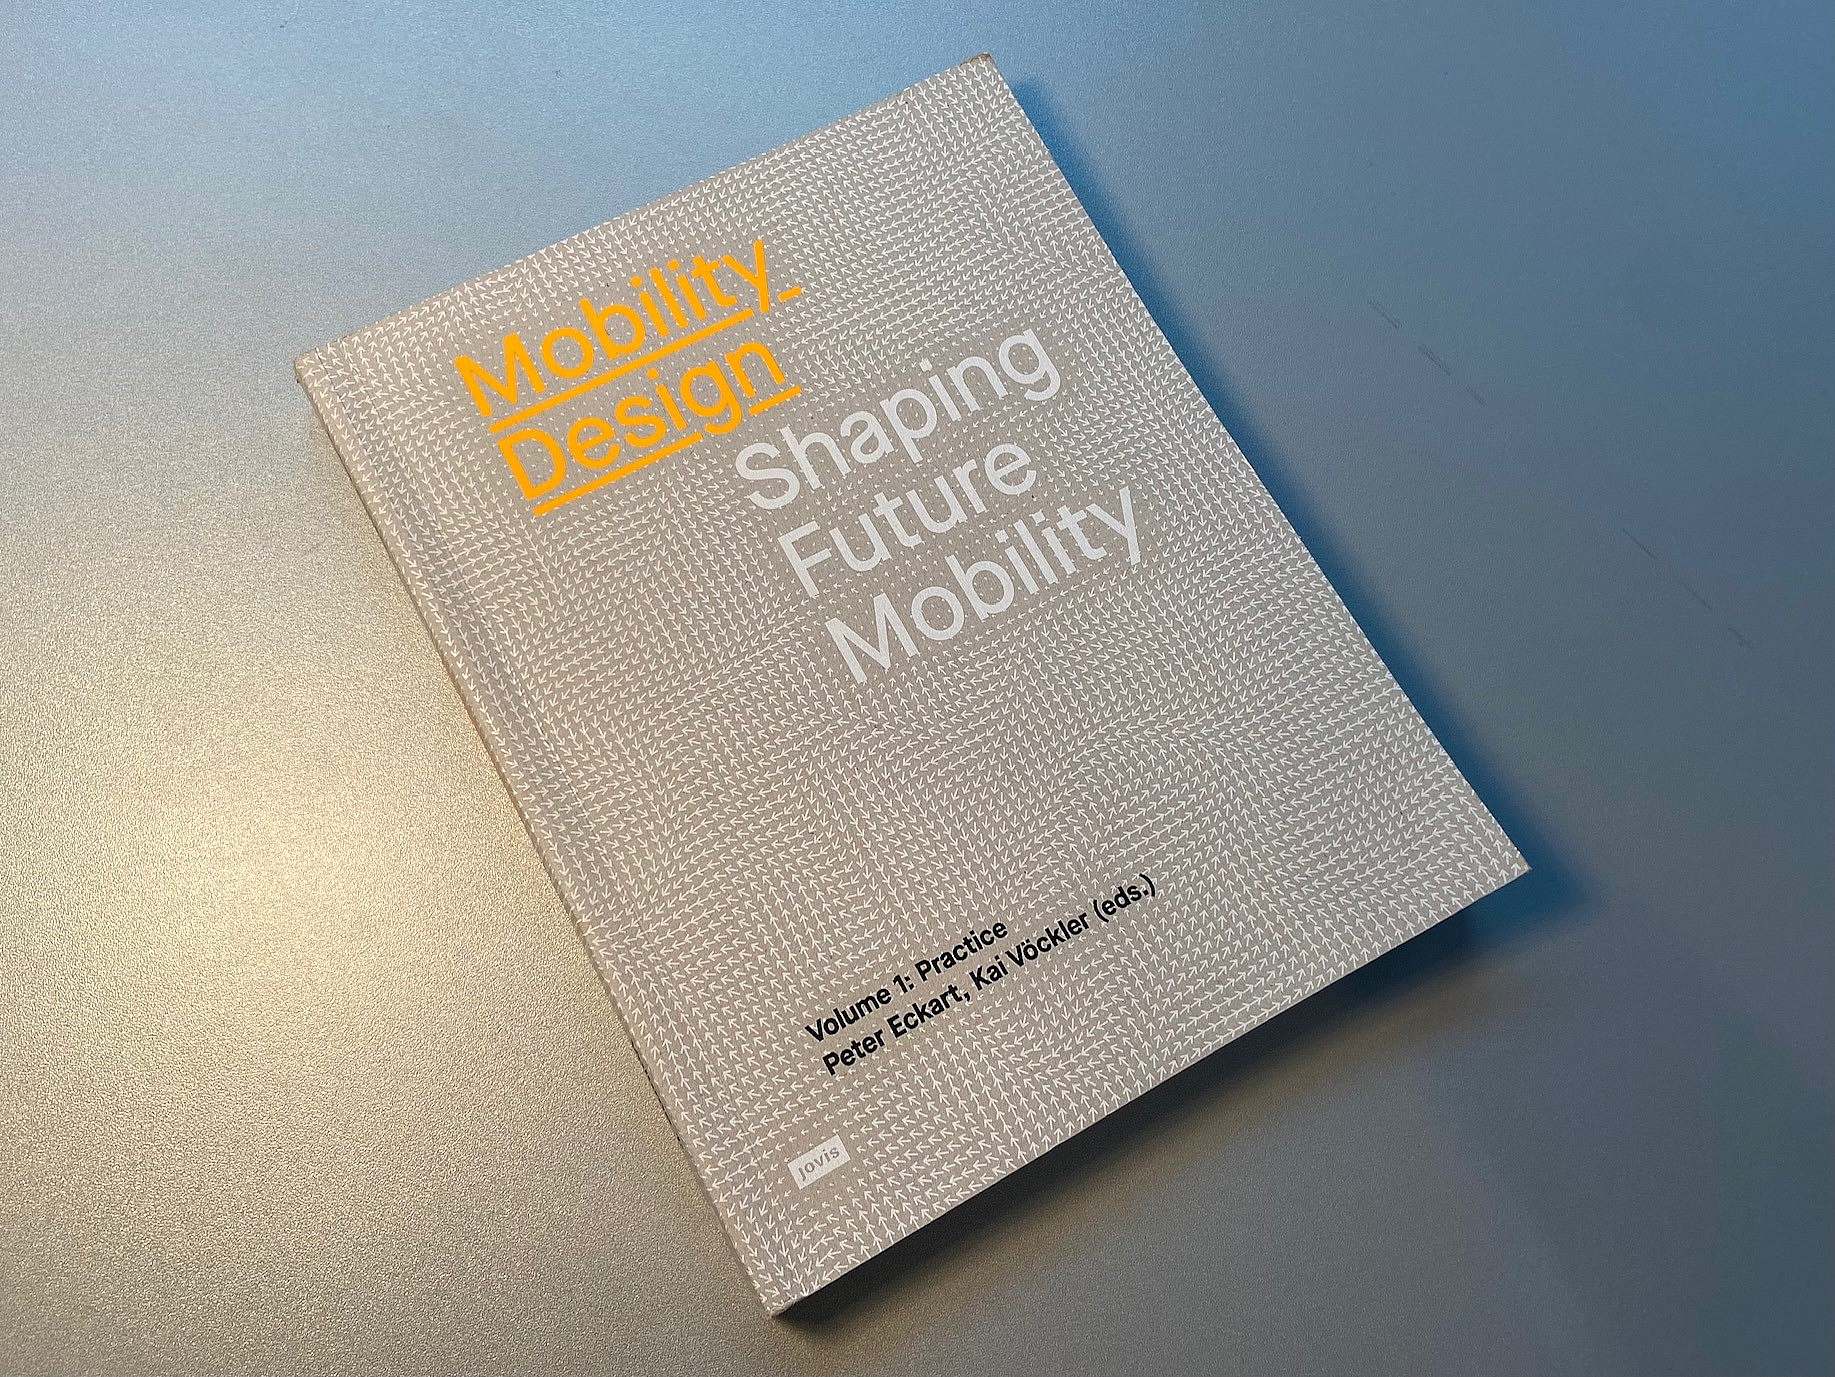 Mobility Design cover